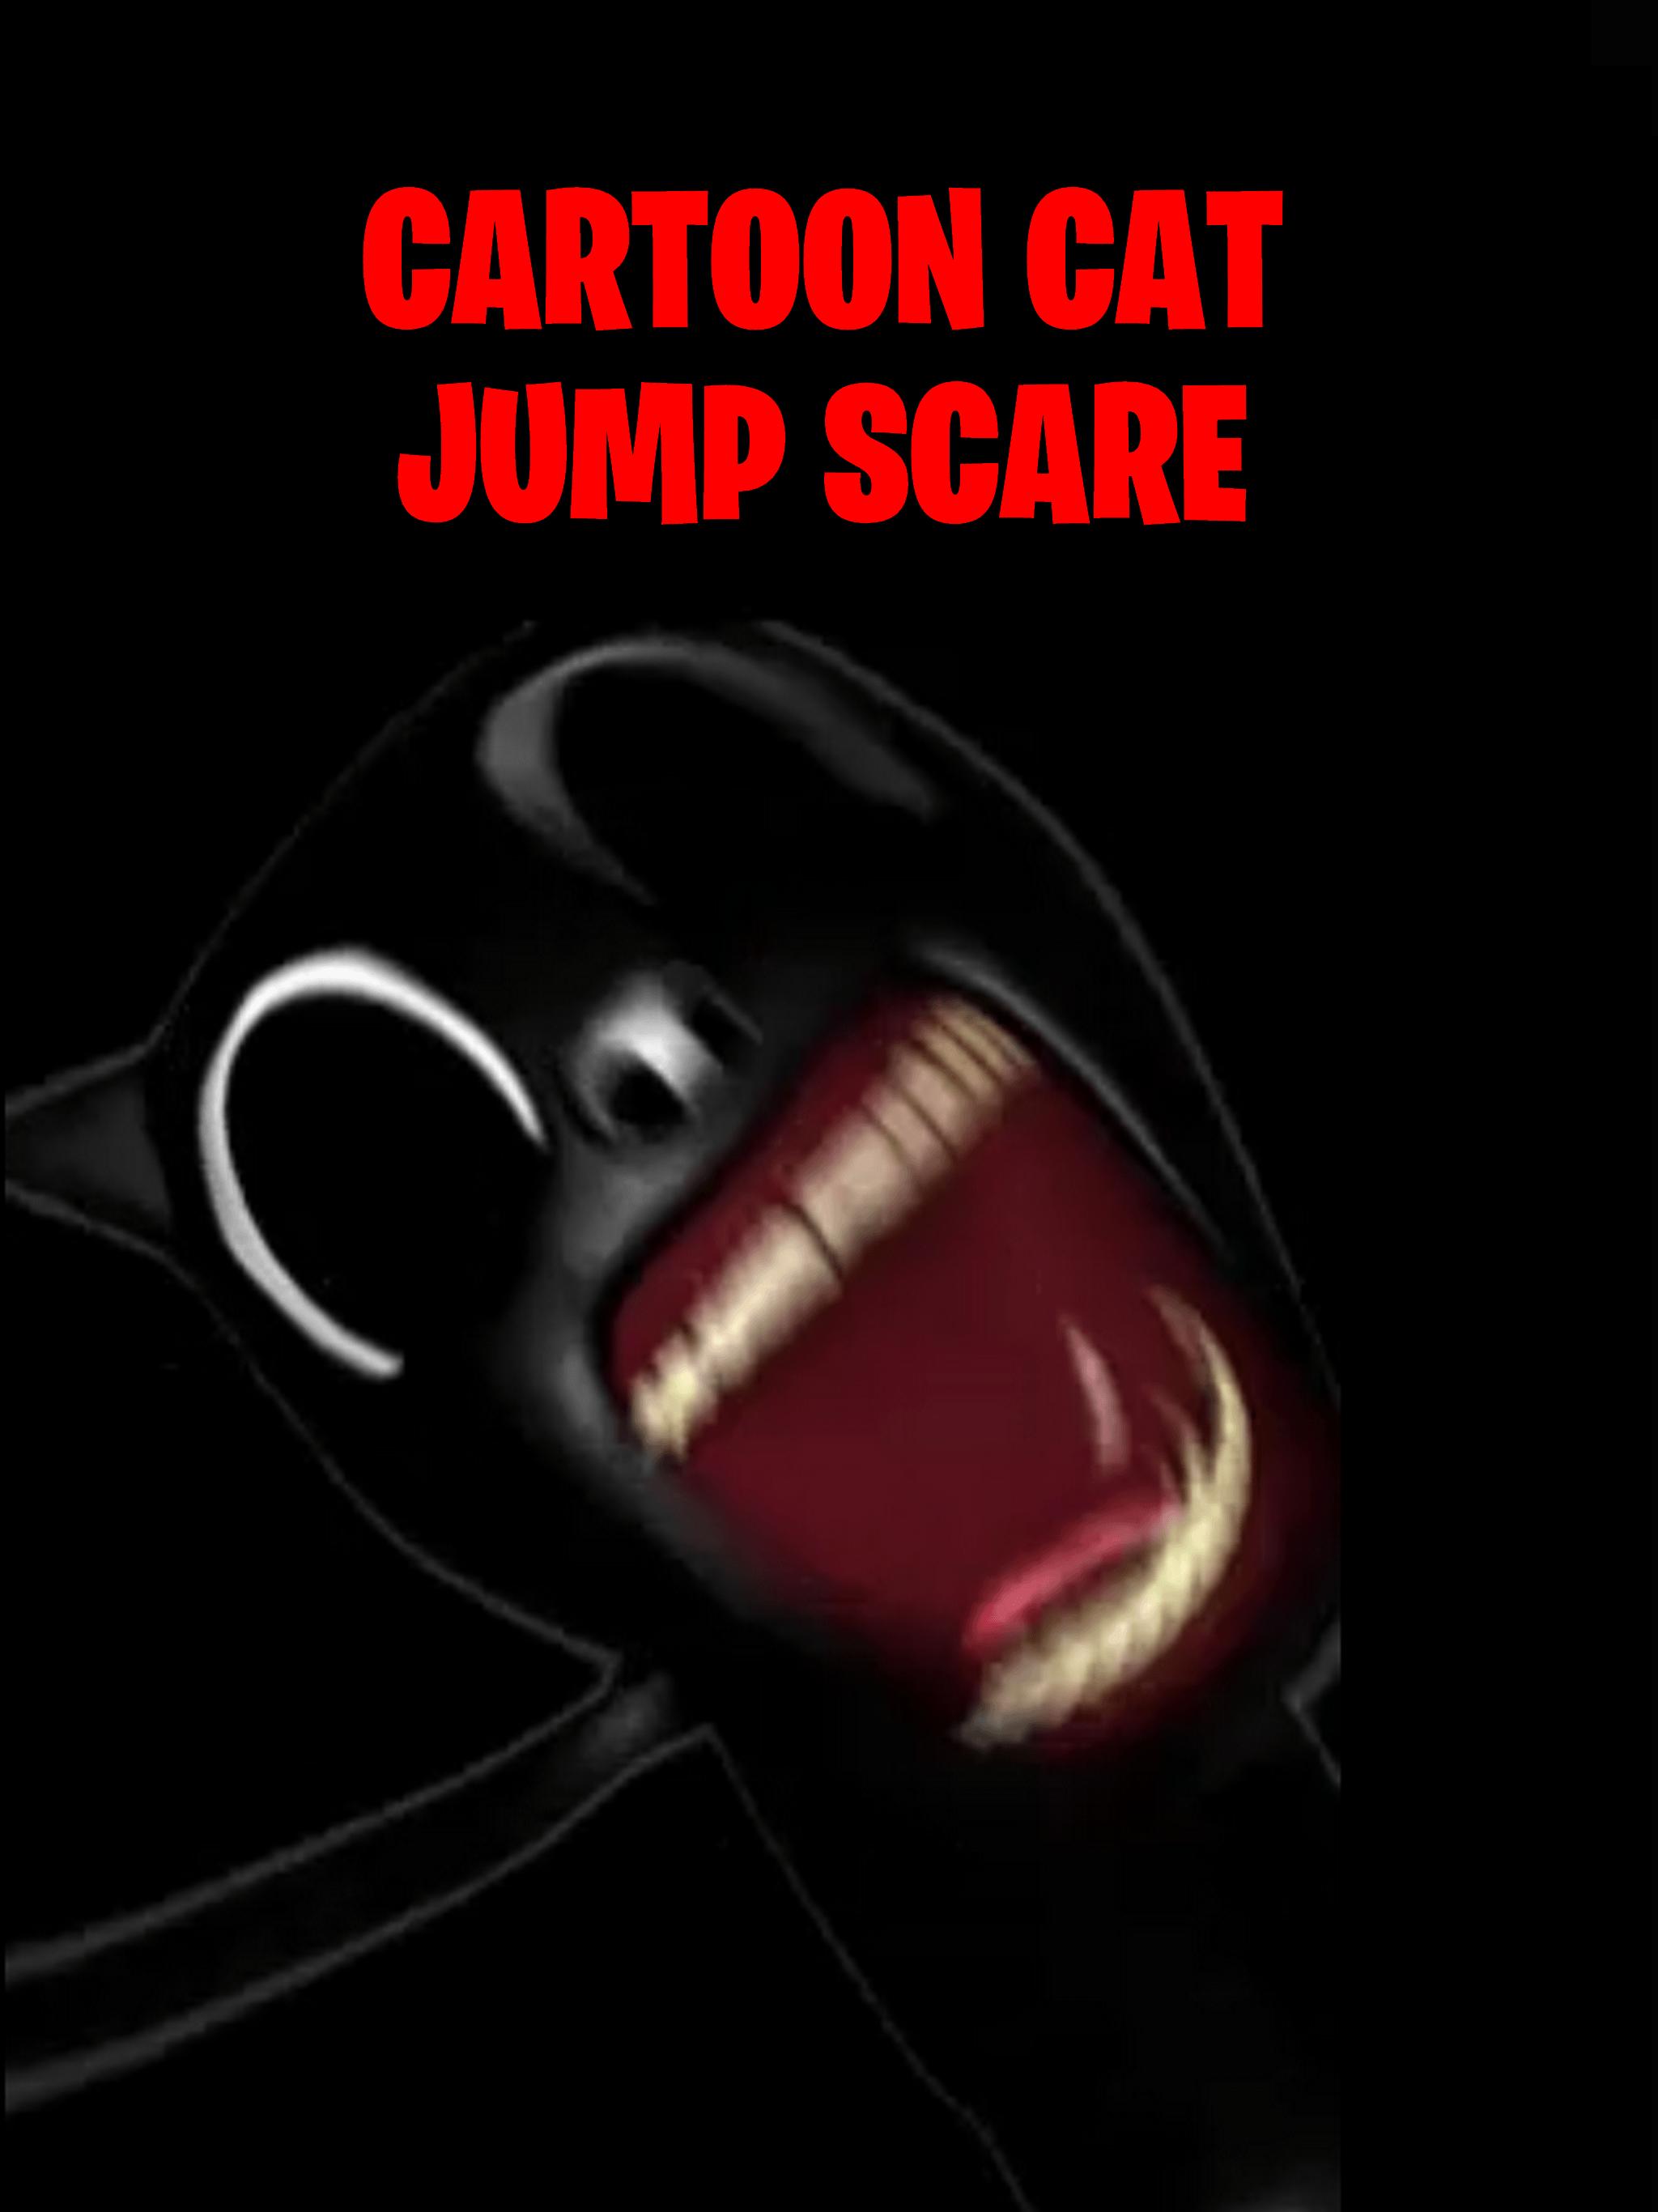 Cartoon Cat horror Sound jumpscare meme soundboard for Android - APK